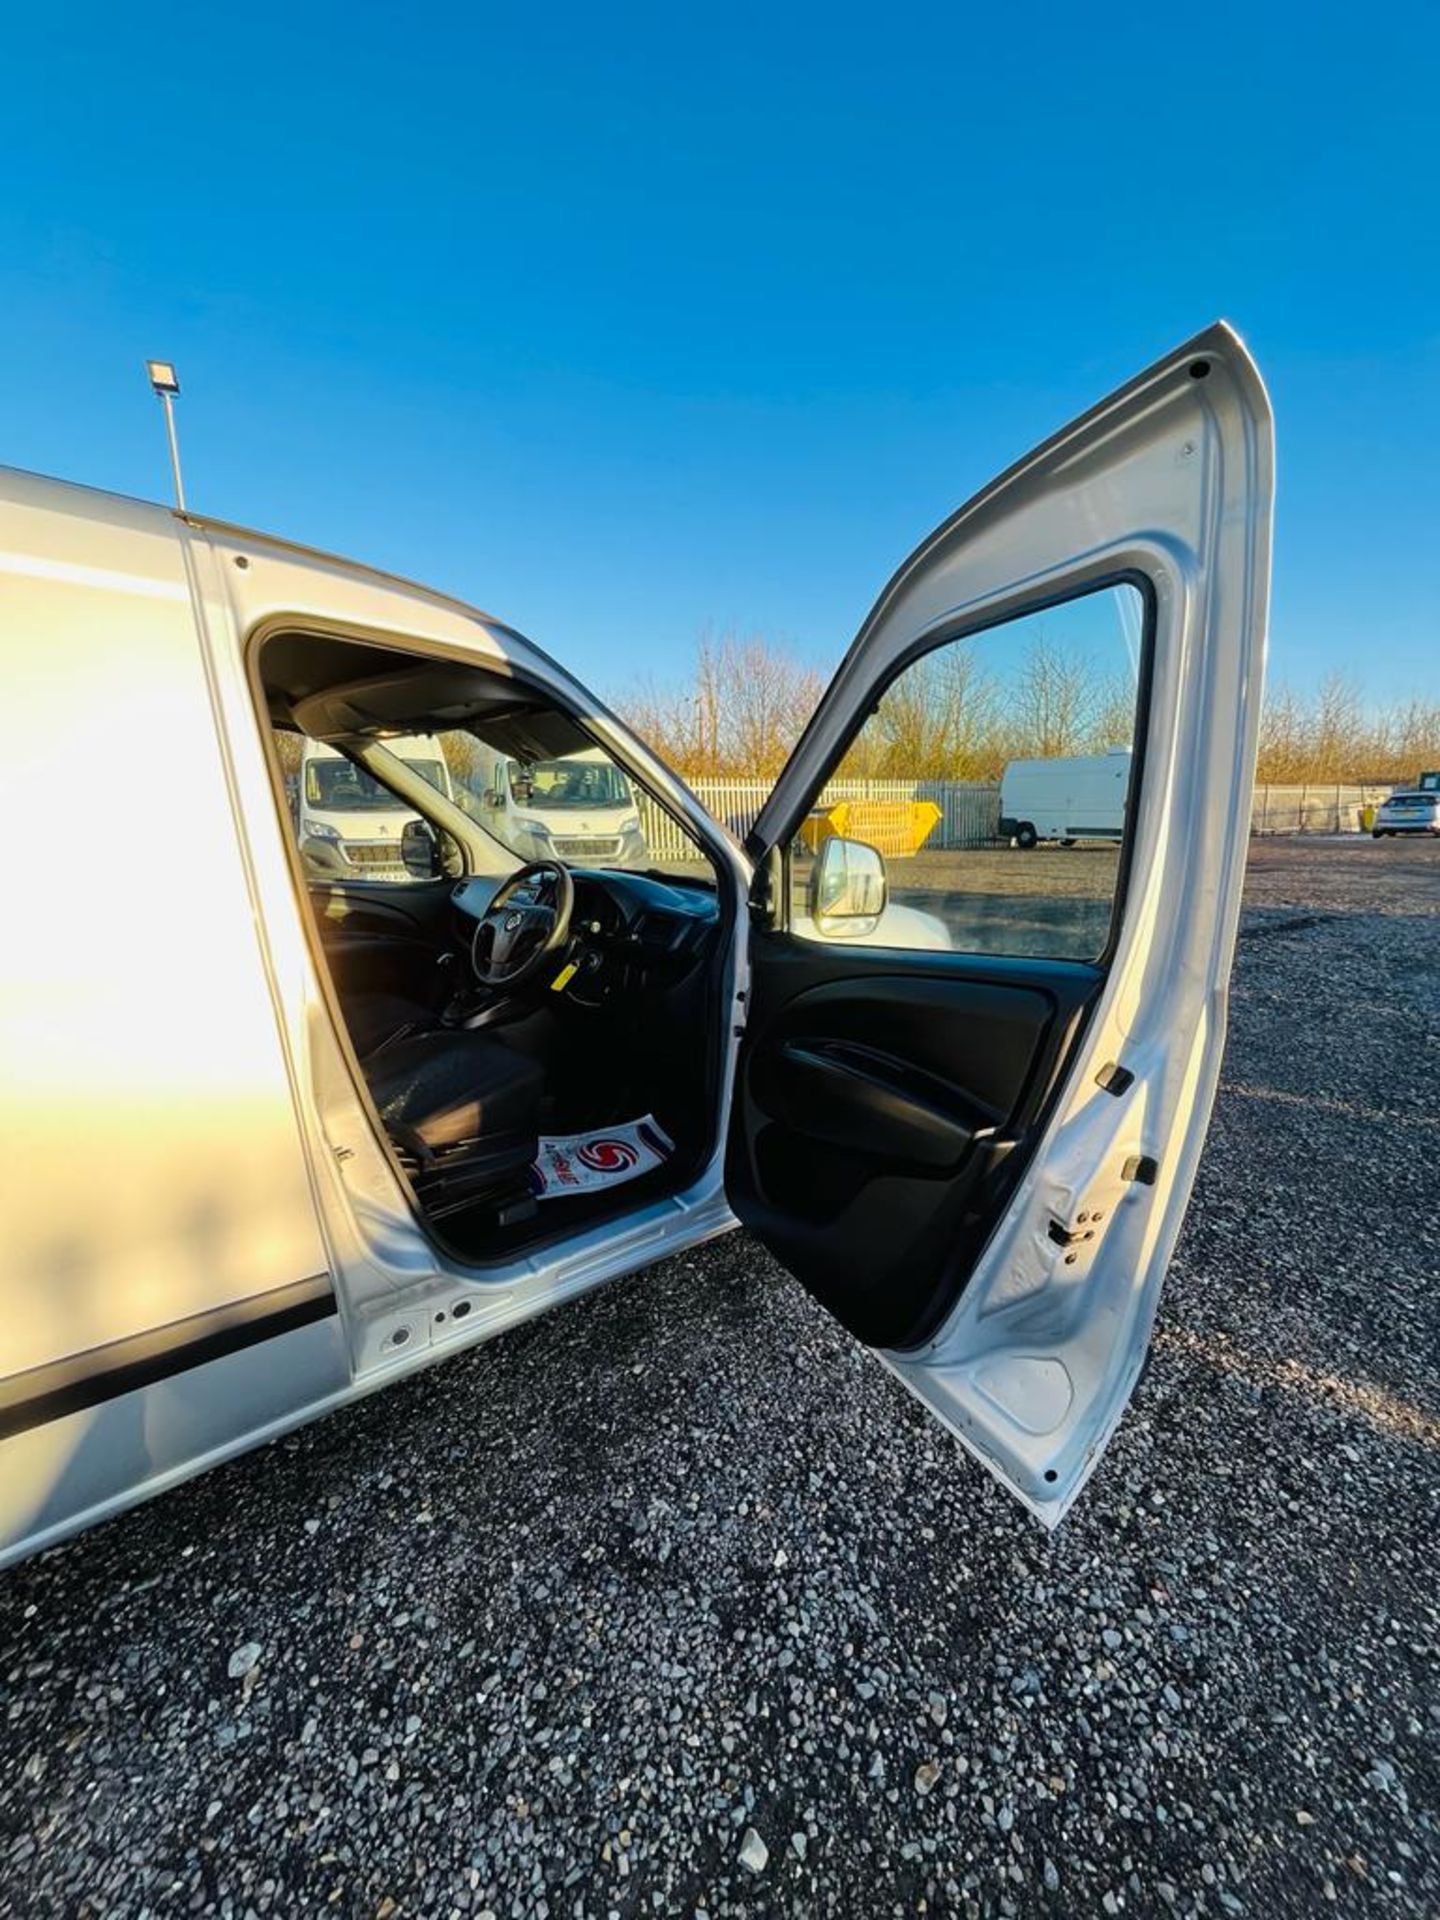 ** ON SALE ** Vauxhall Combo 1.3 CDTI 'Sportive' L1 H1 2015 '15 Reg' - Panel Van - No Vat - Image 14 of 23